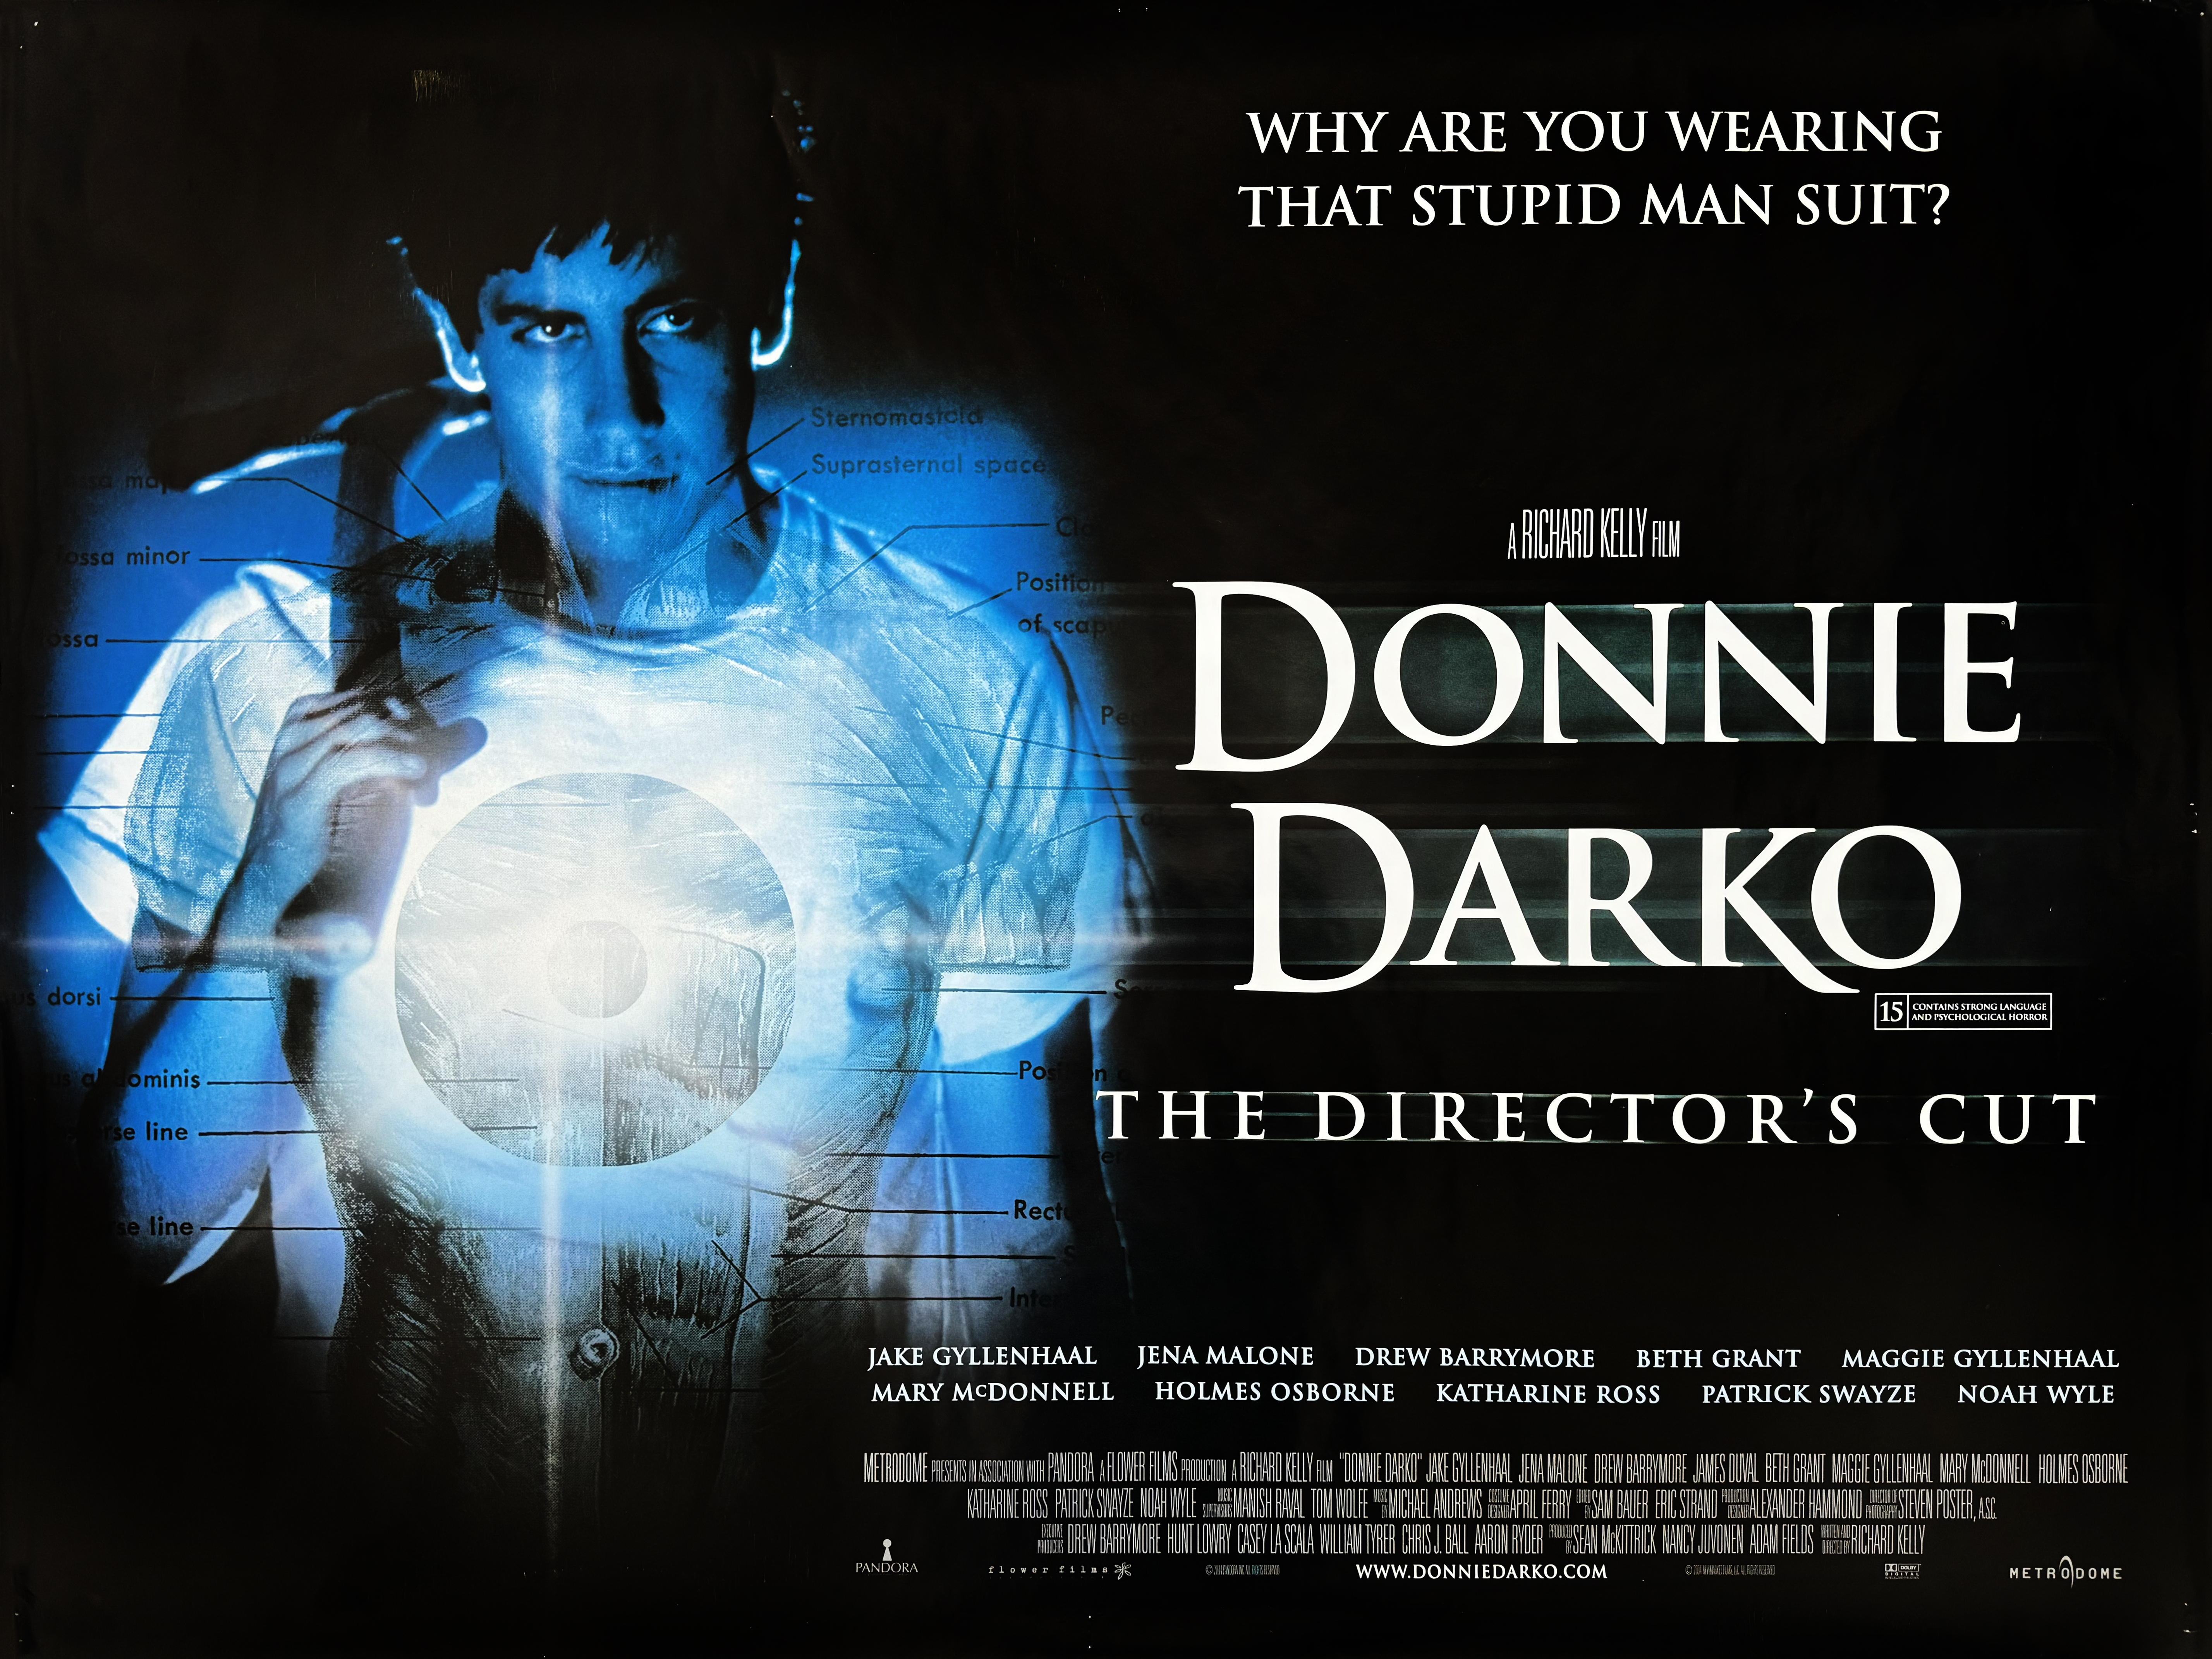 Donnie Darko Director's Cut quad poster